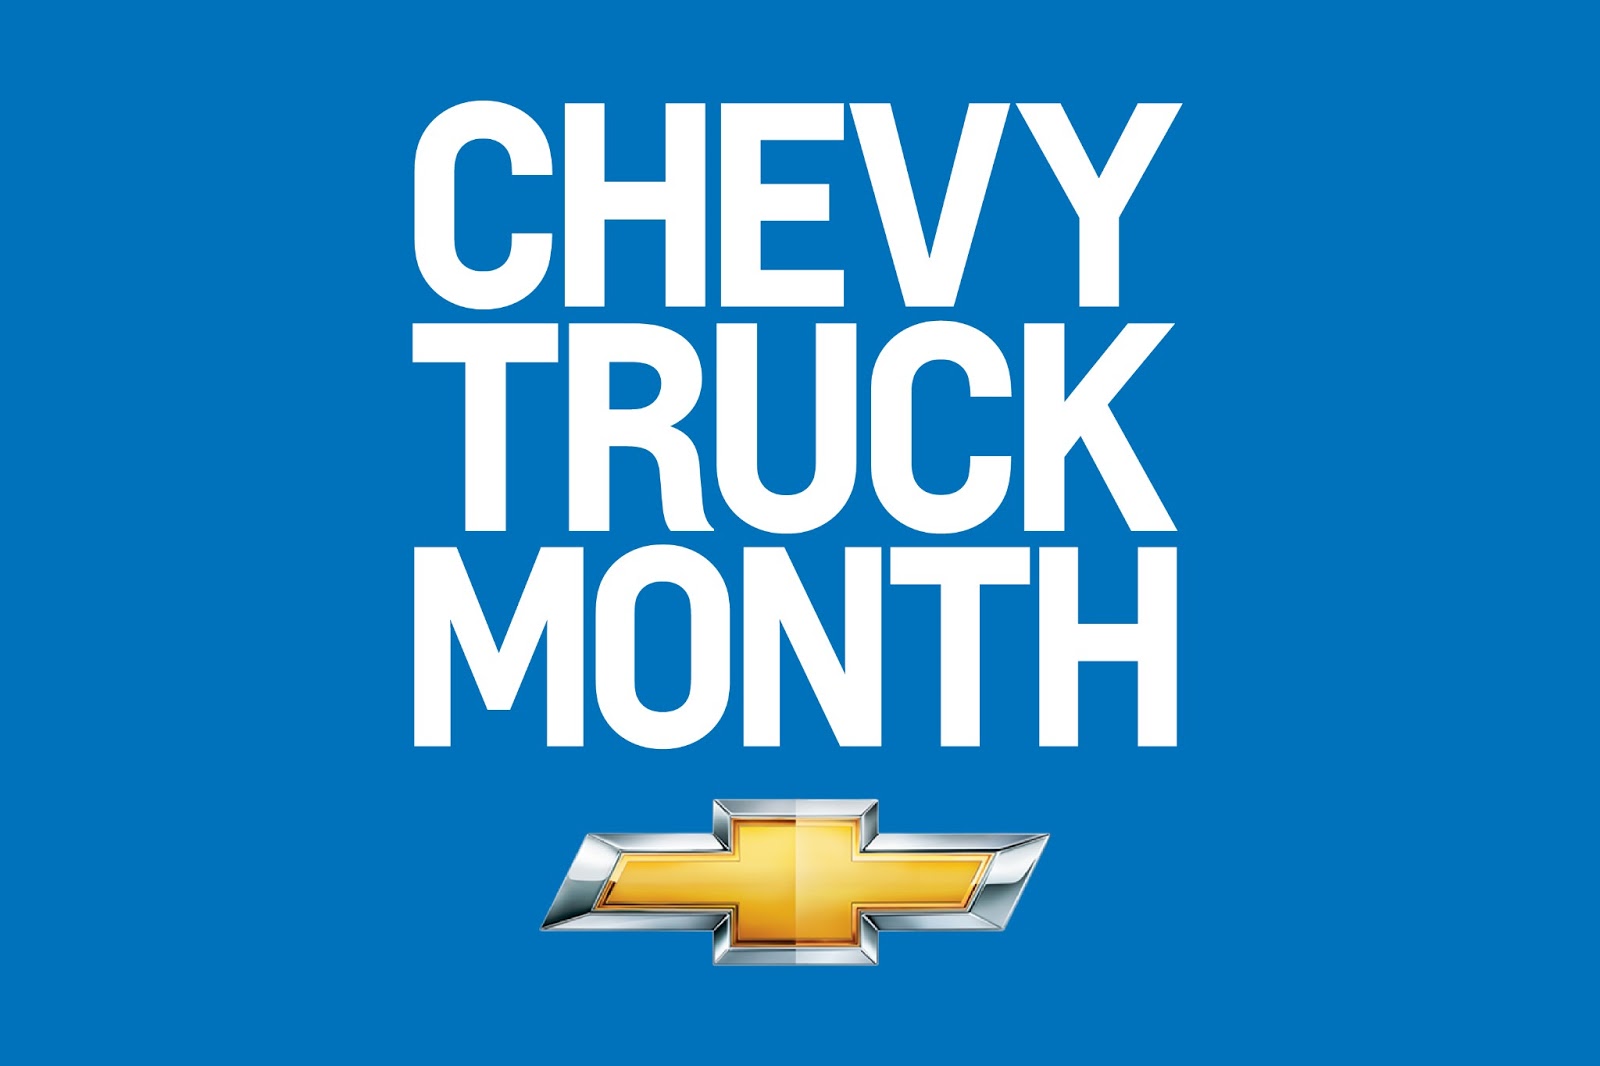 Baum Chevrolet Buick Truck Month